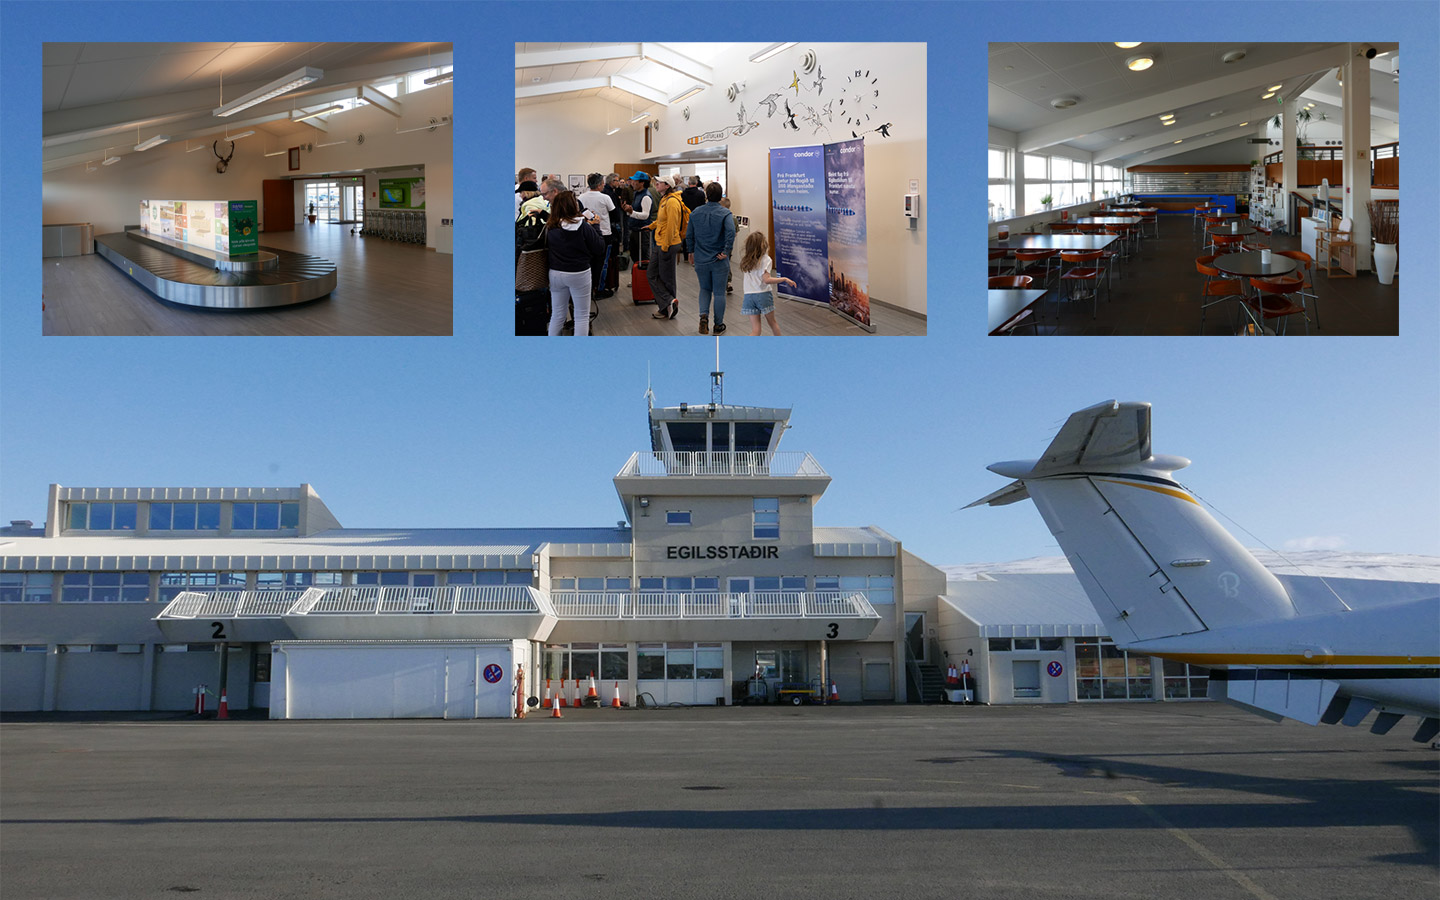 Egilsstaðir airport is compact and friendly